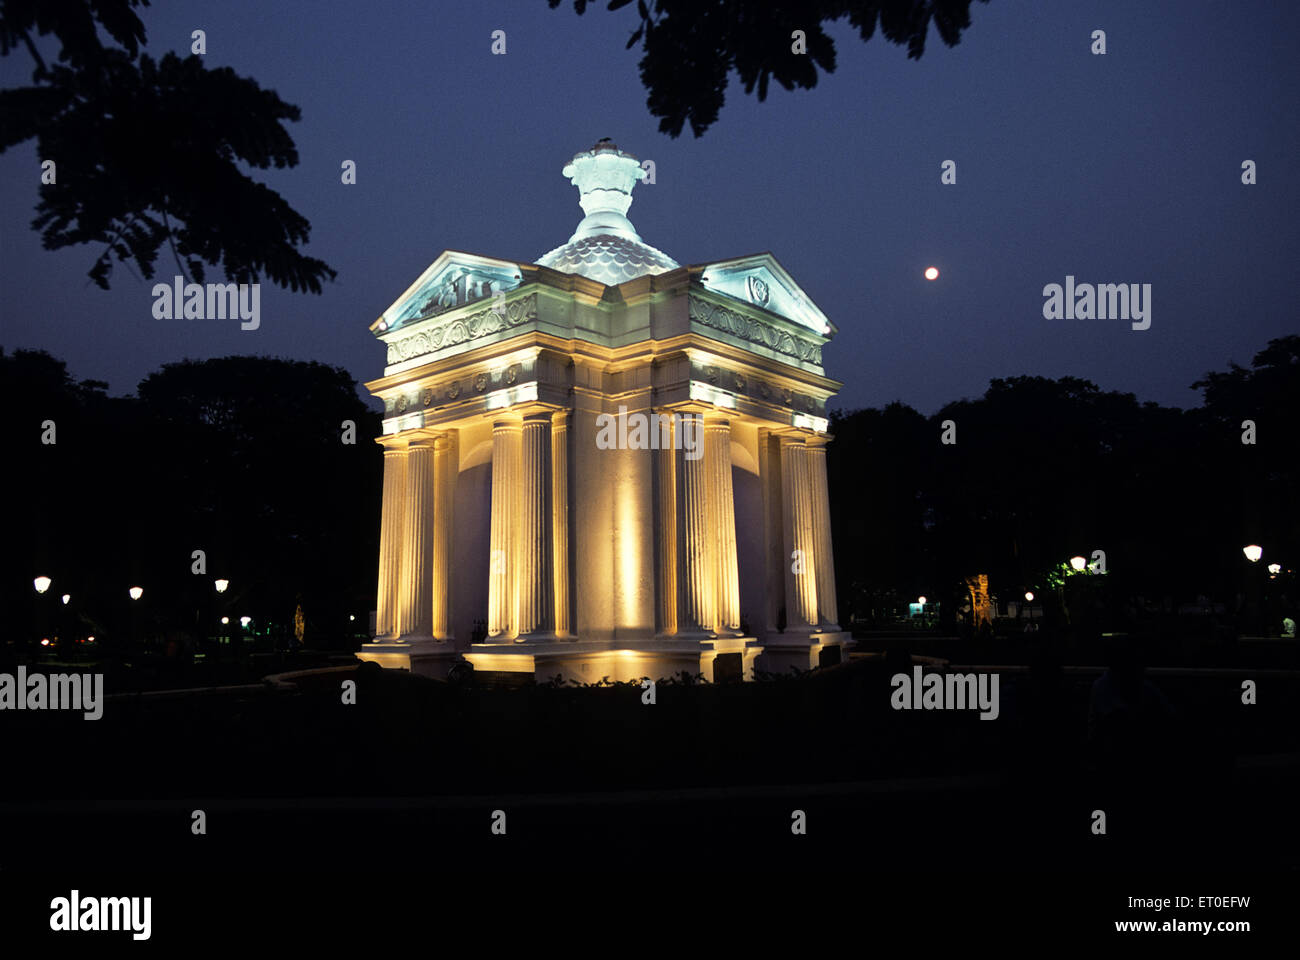 Aayi mandapam greco roman architecture ; Pondicherry ; Tamil Nadu ; India Stock Photo